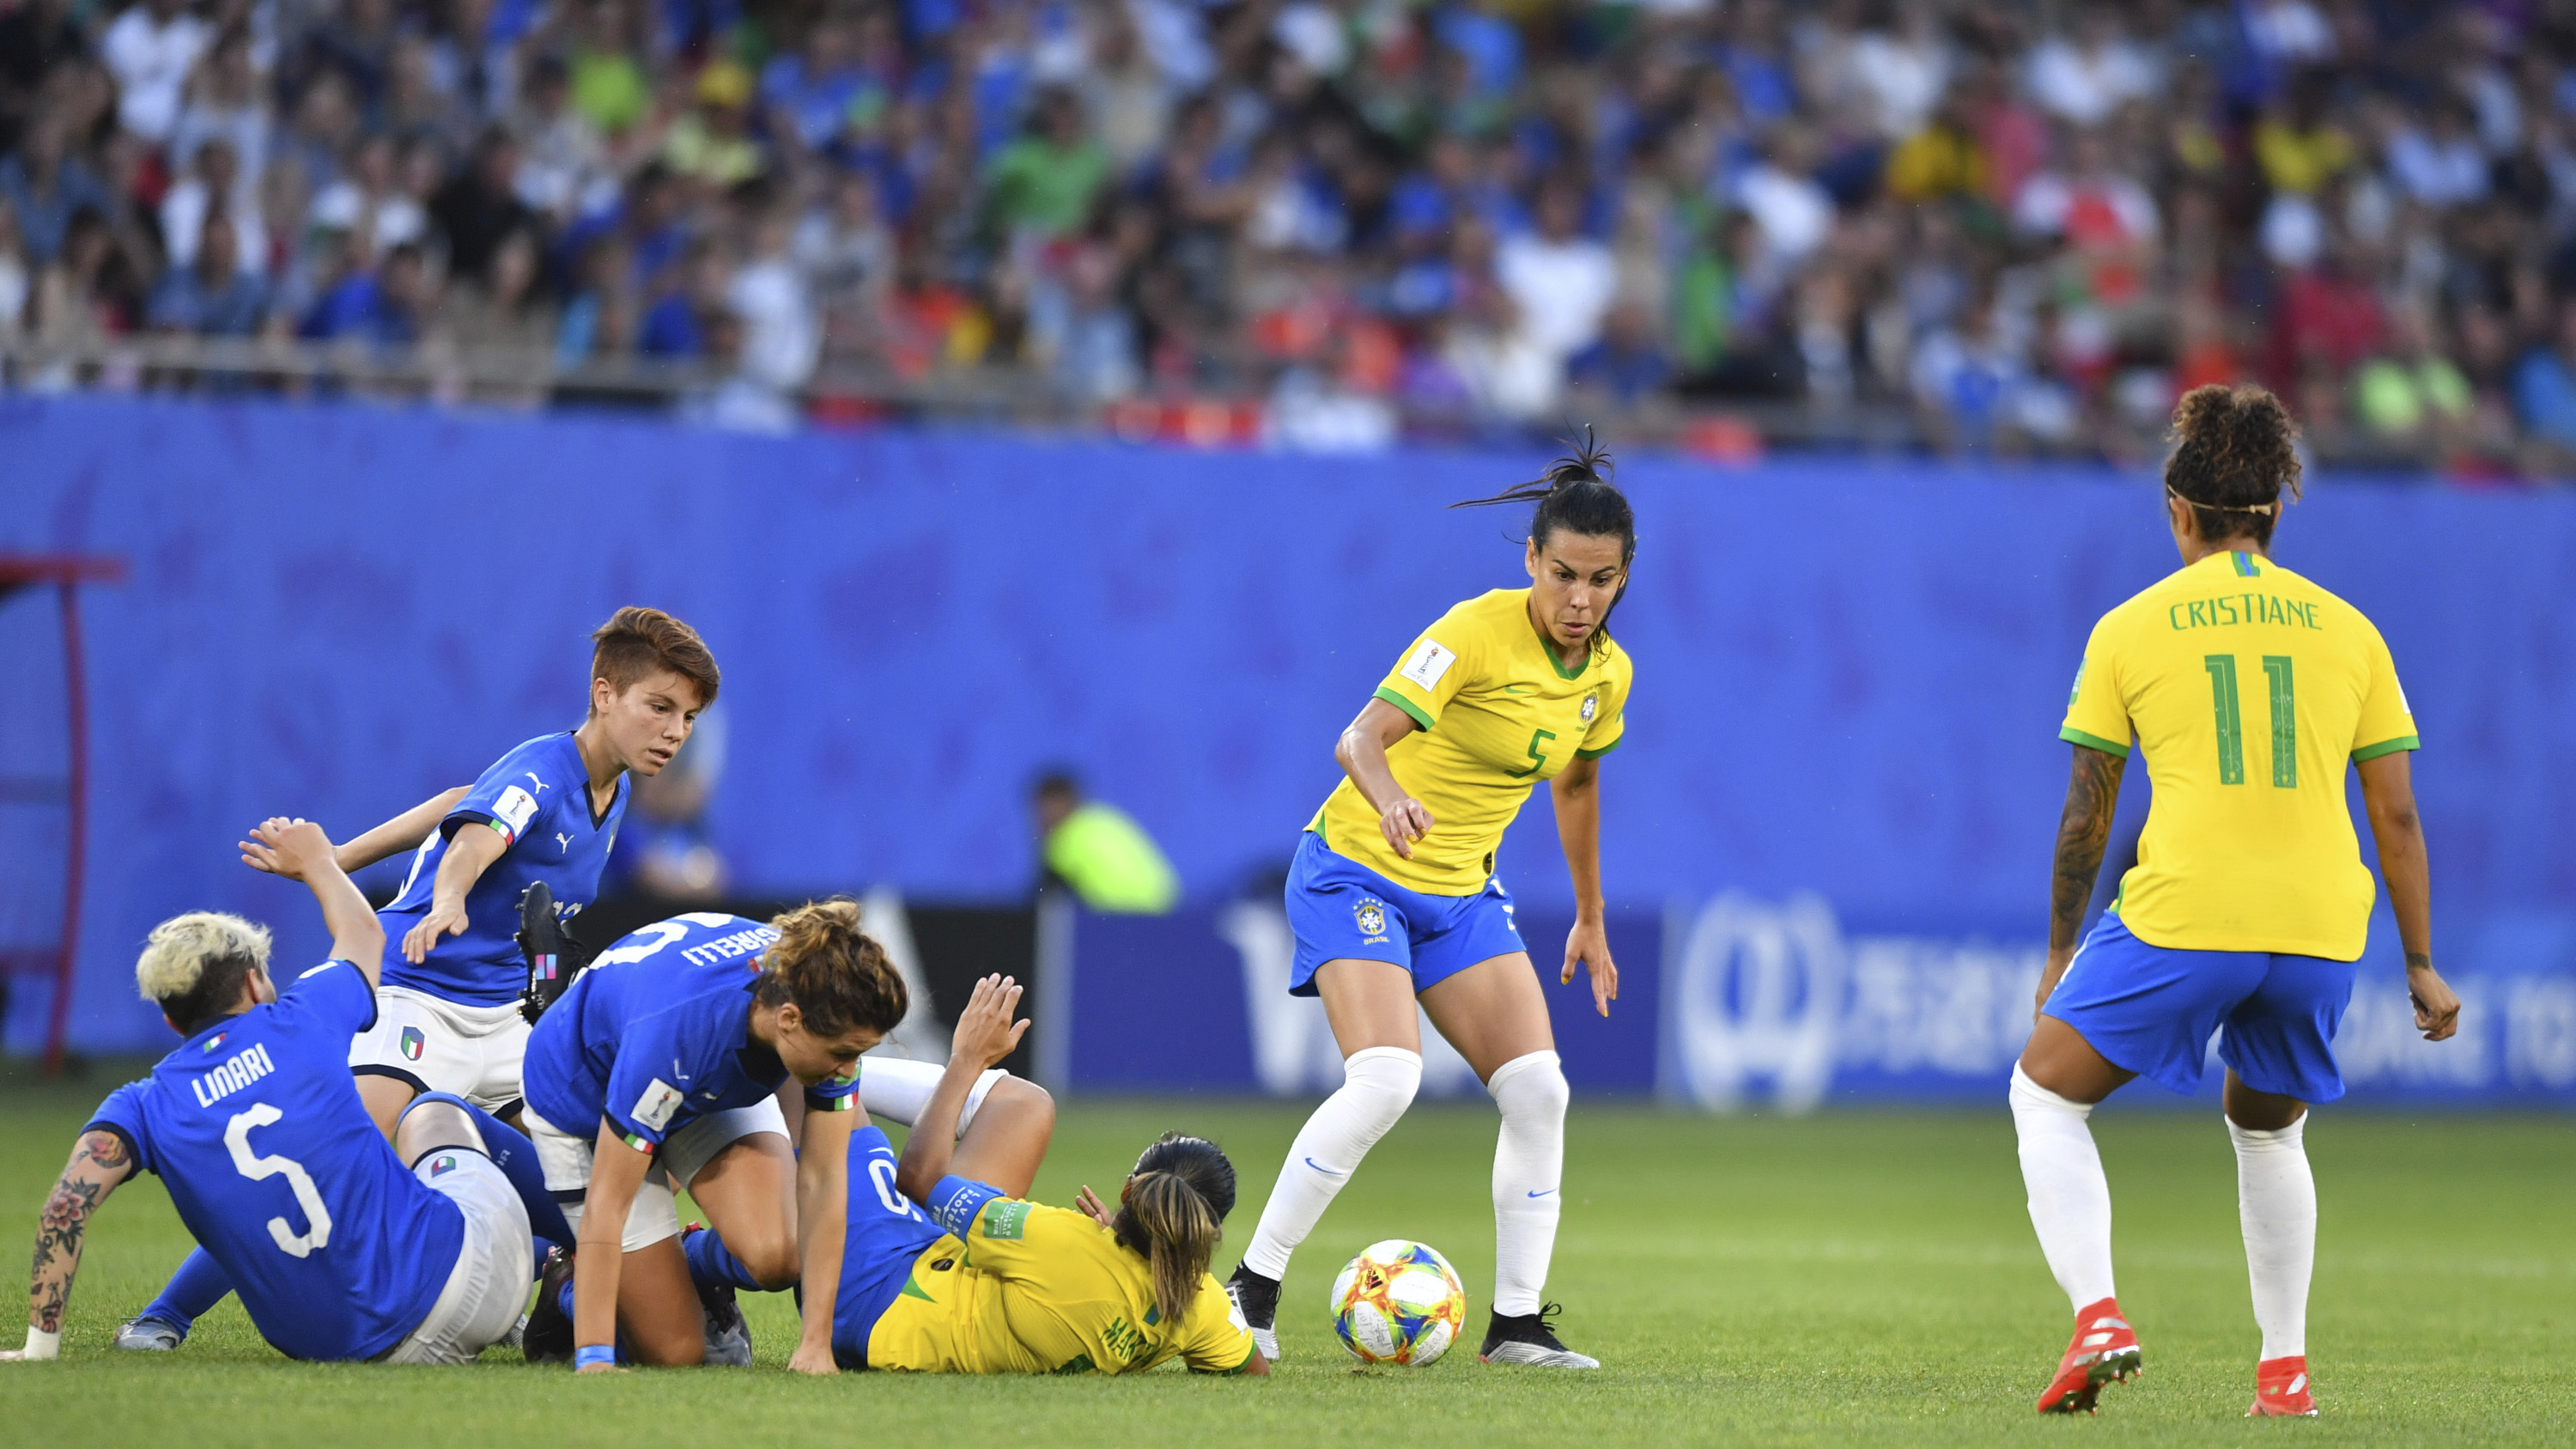 Football, FIFA Women's World Cup 2019, Italy - Brazil